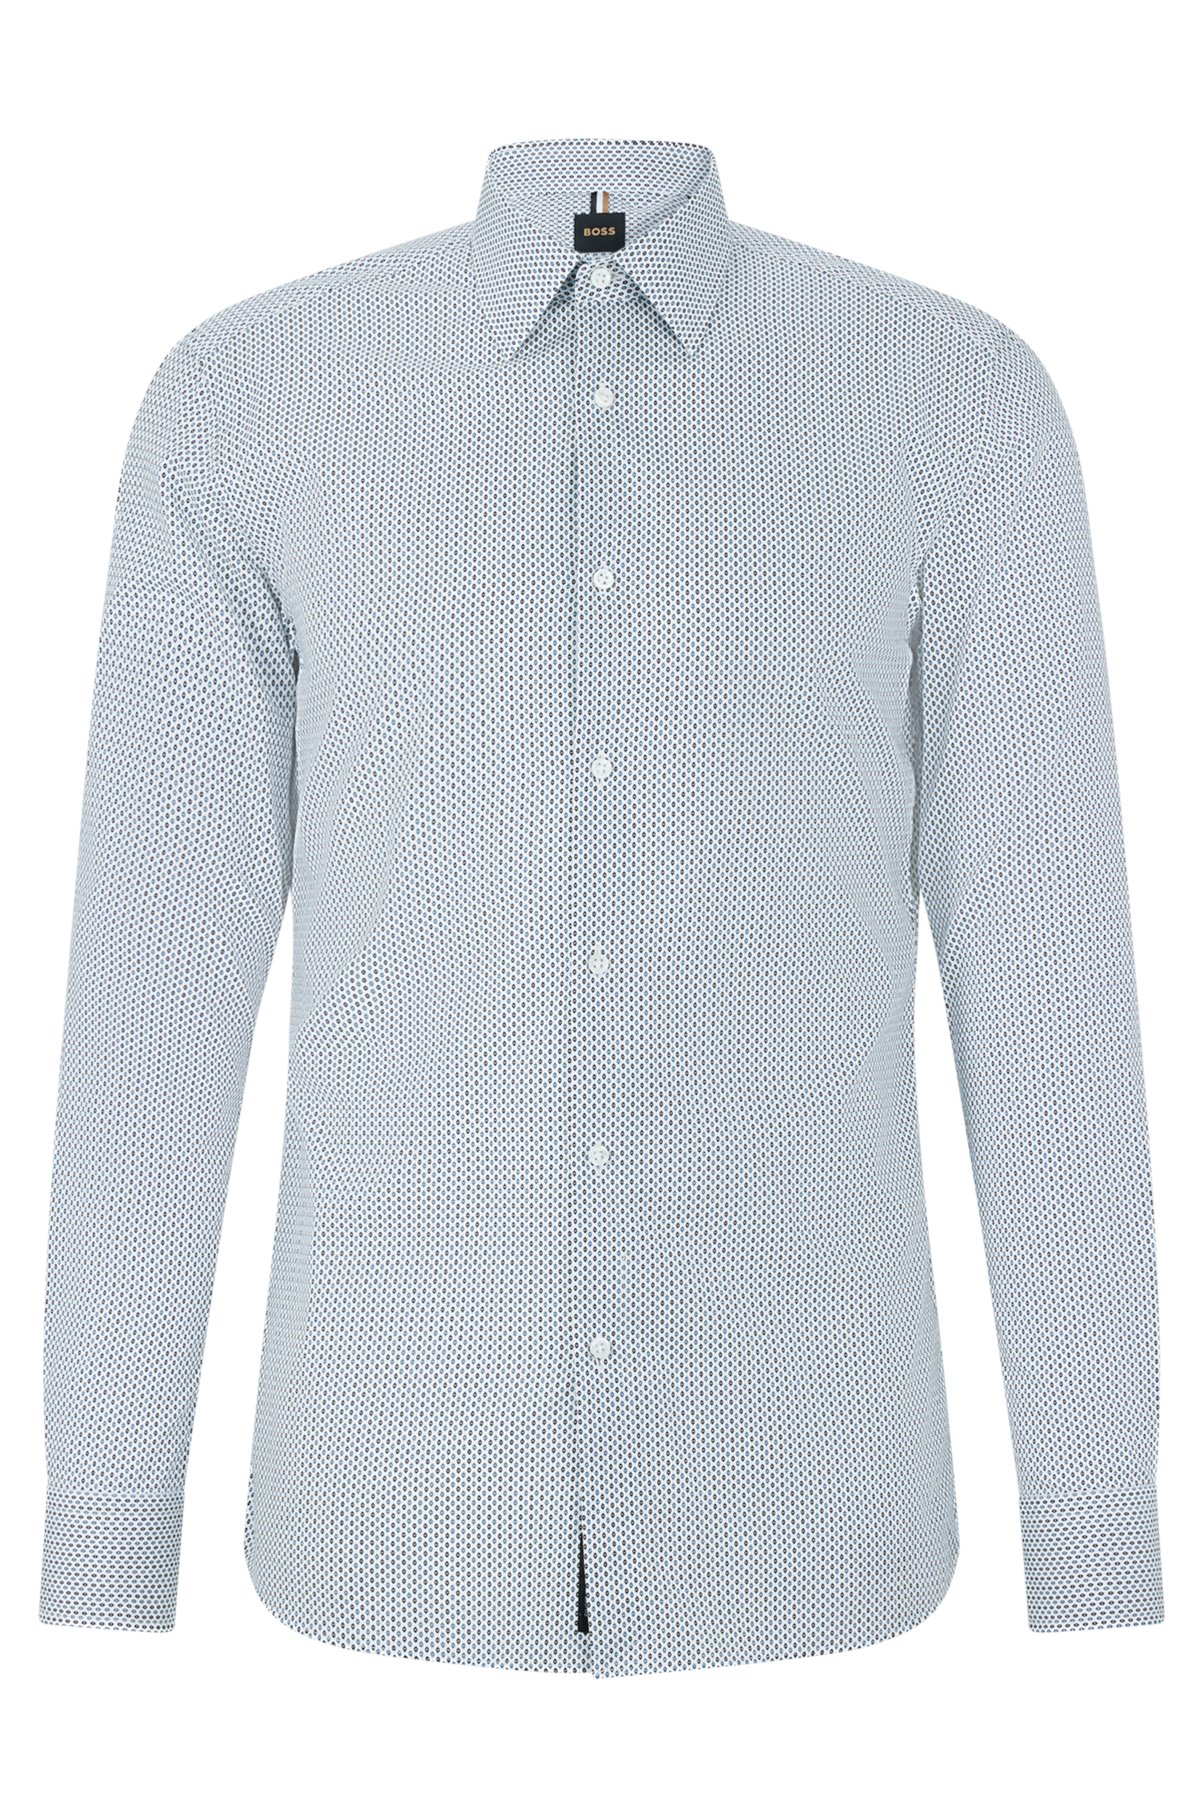 BOSS - Slim-fit shirt in printed Italian cotton poplin